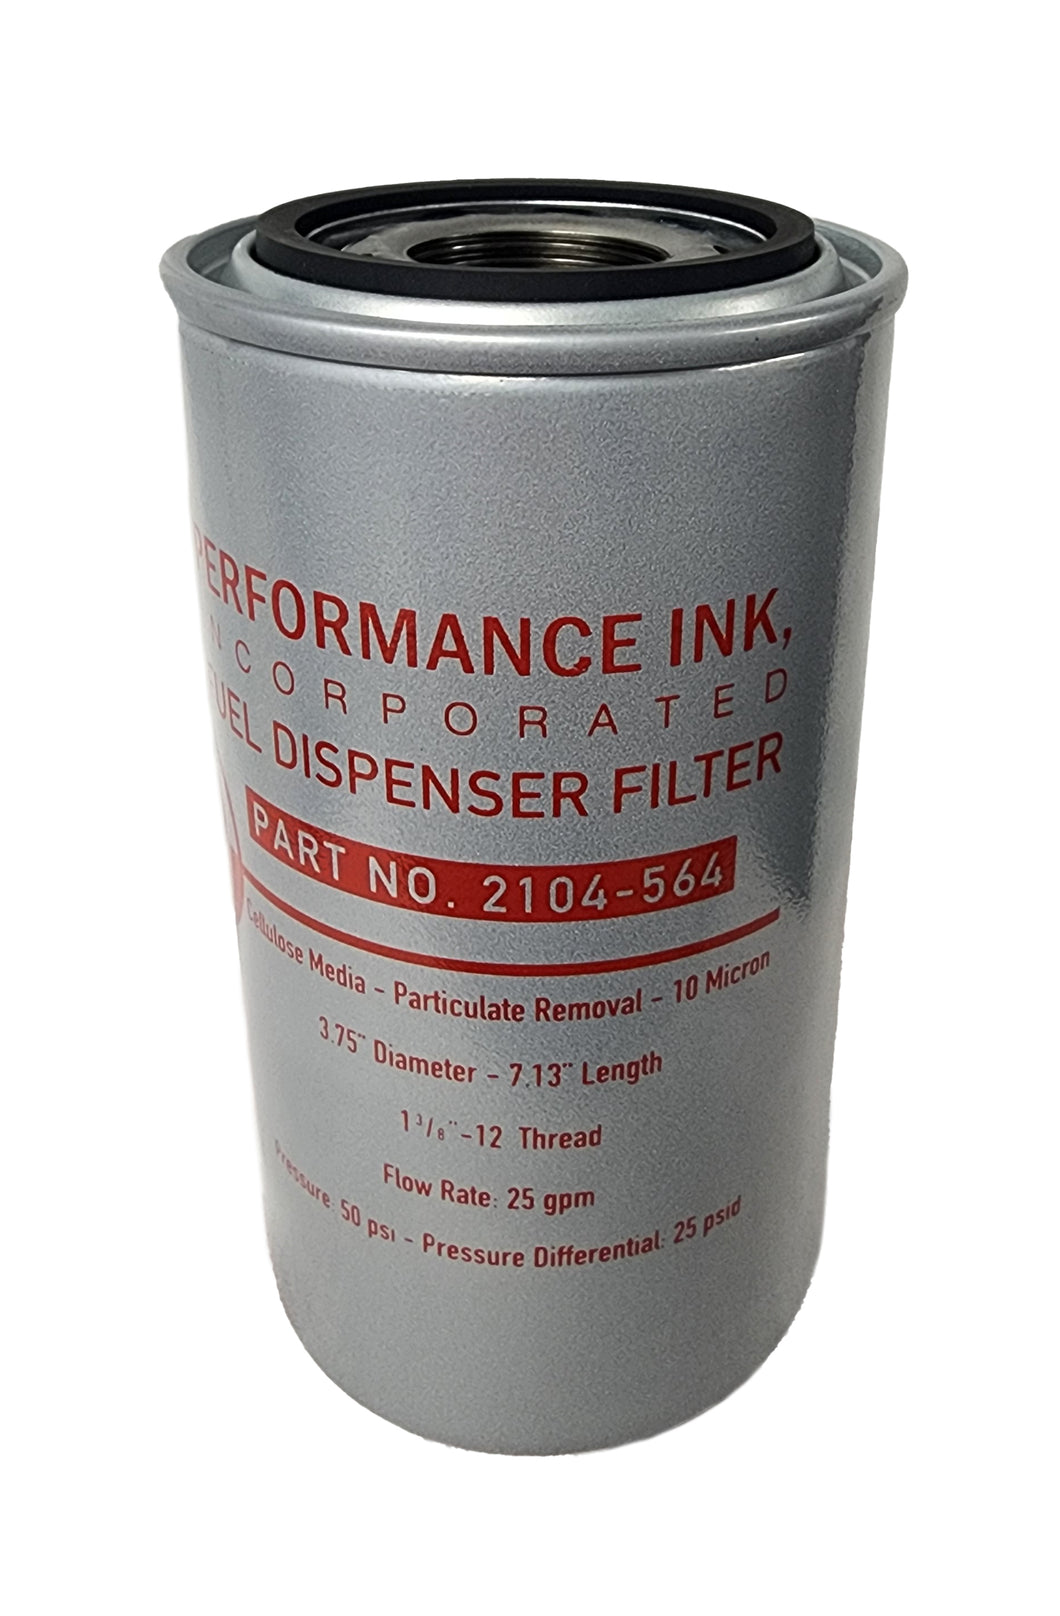 Performance Ink PI-2104-564, 10 Micron, 1